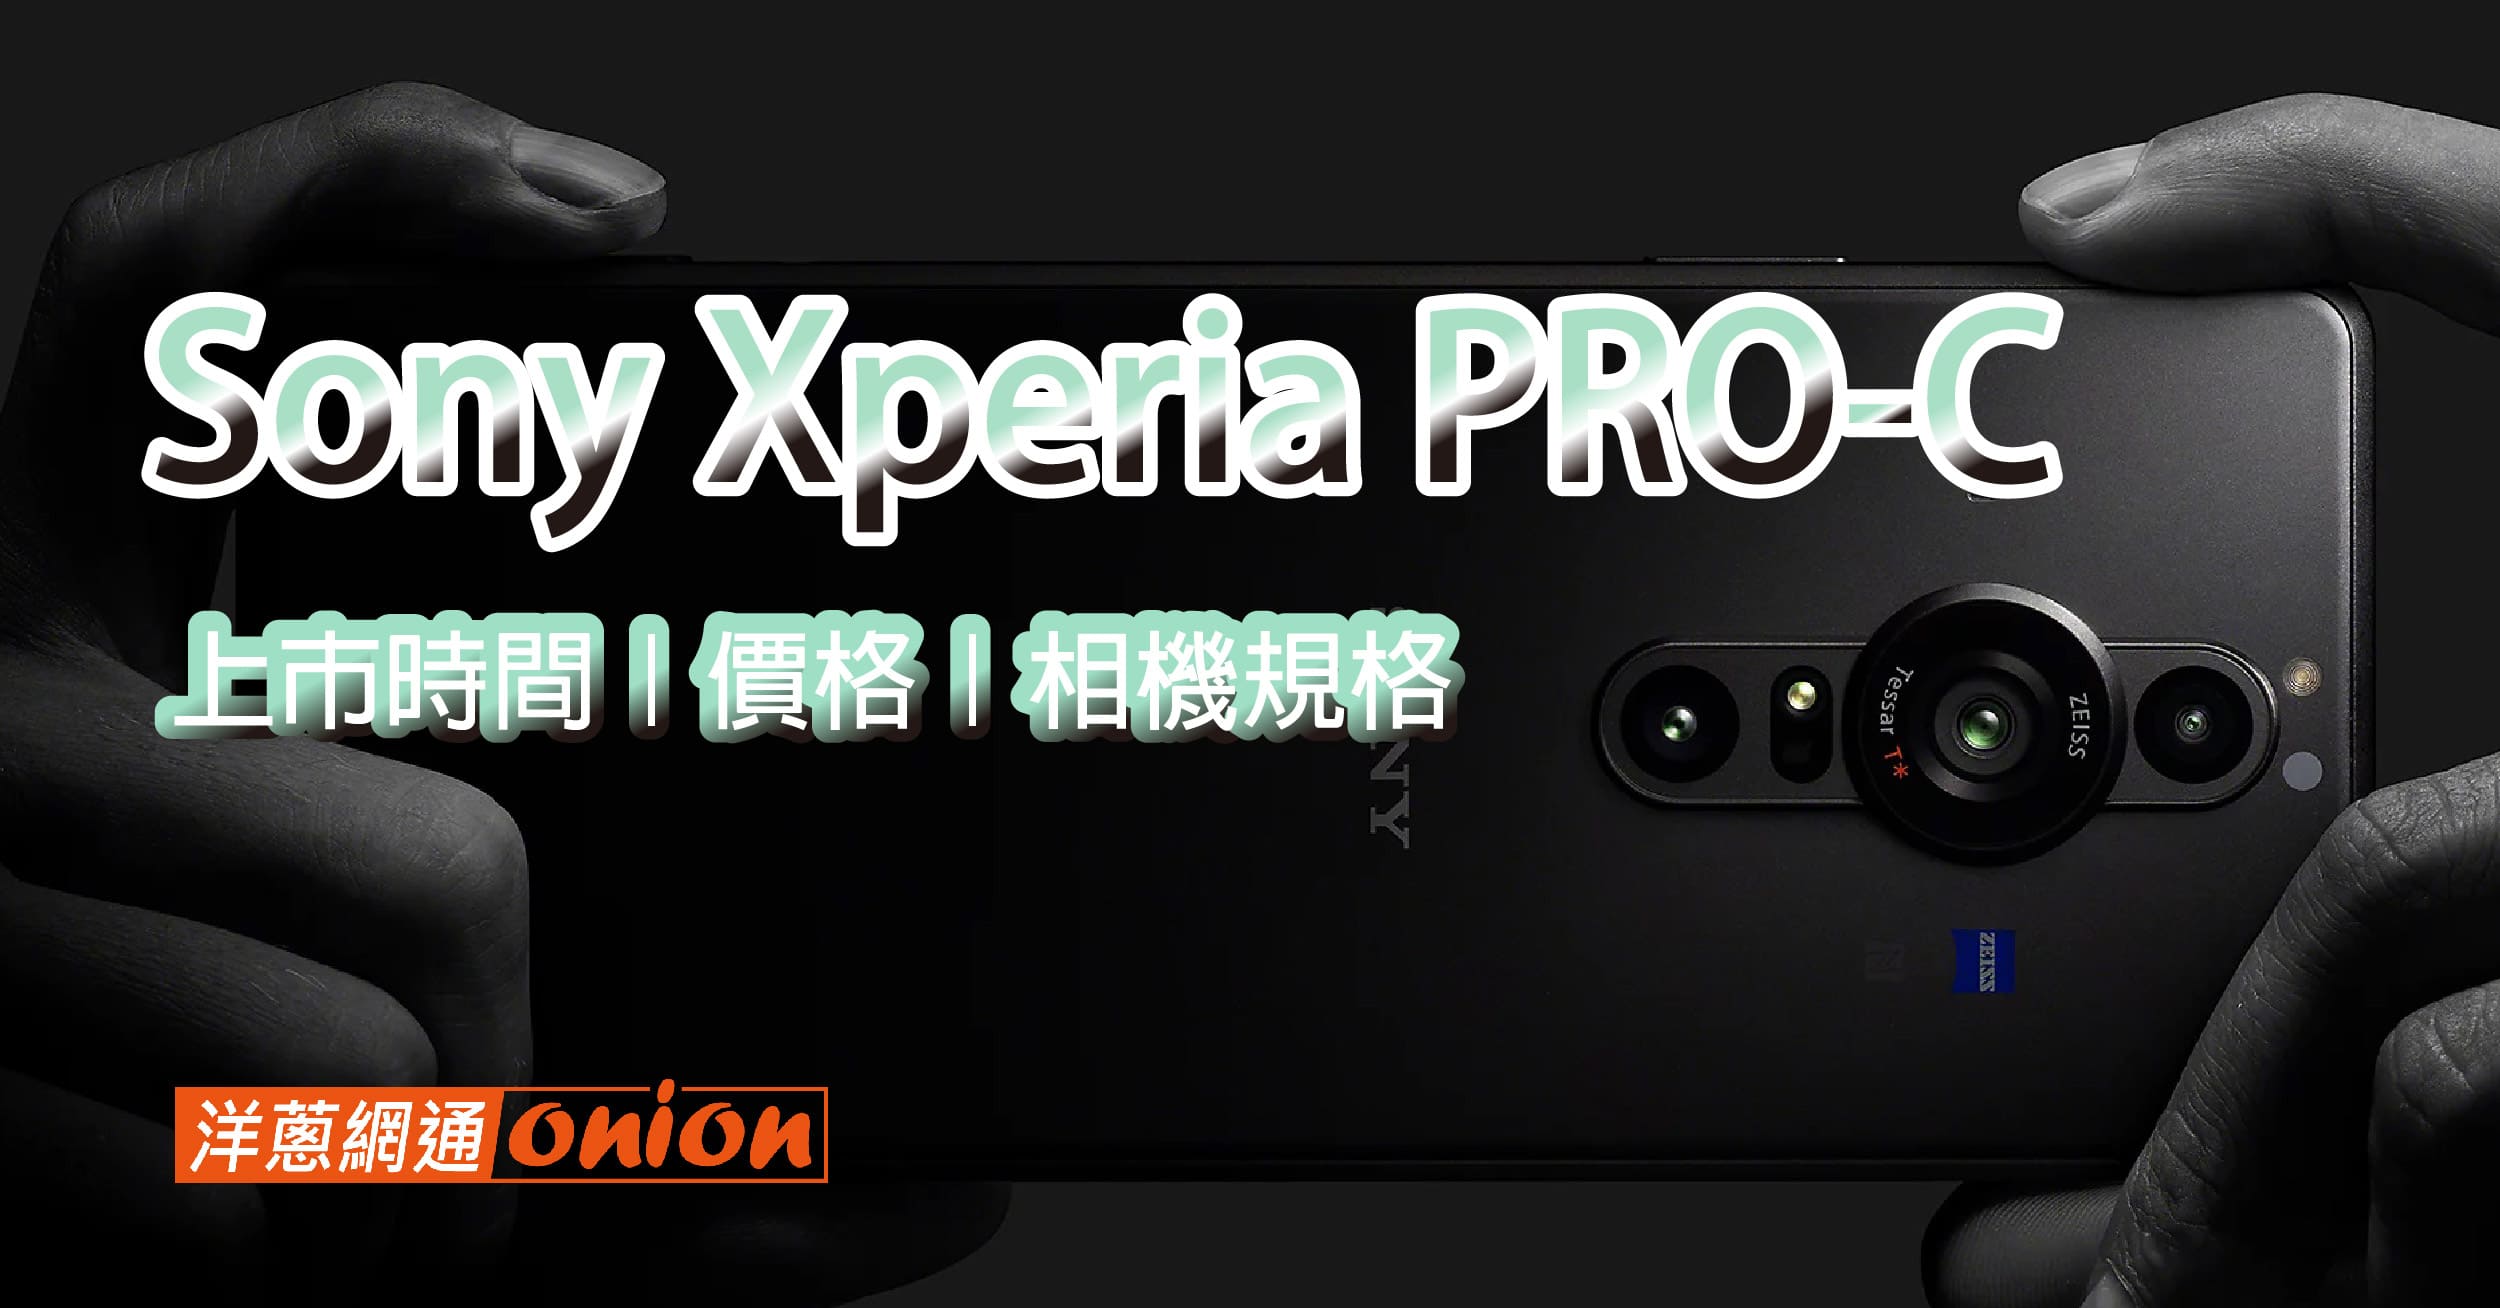 Sony Xperia PRO-C 年底上市？上市時間、價格、相機規格看這篇